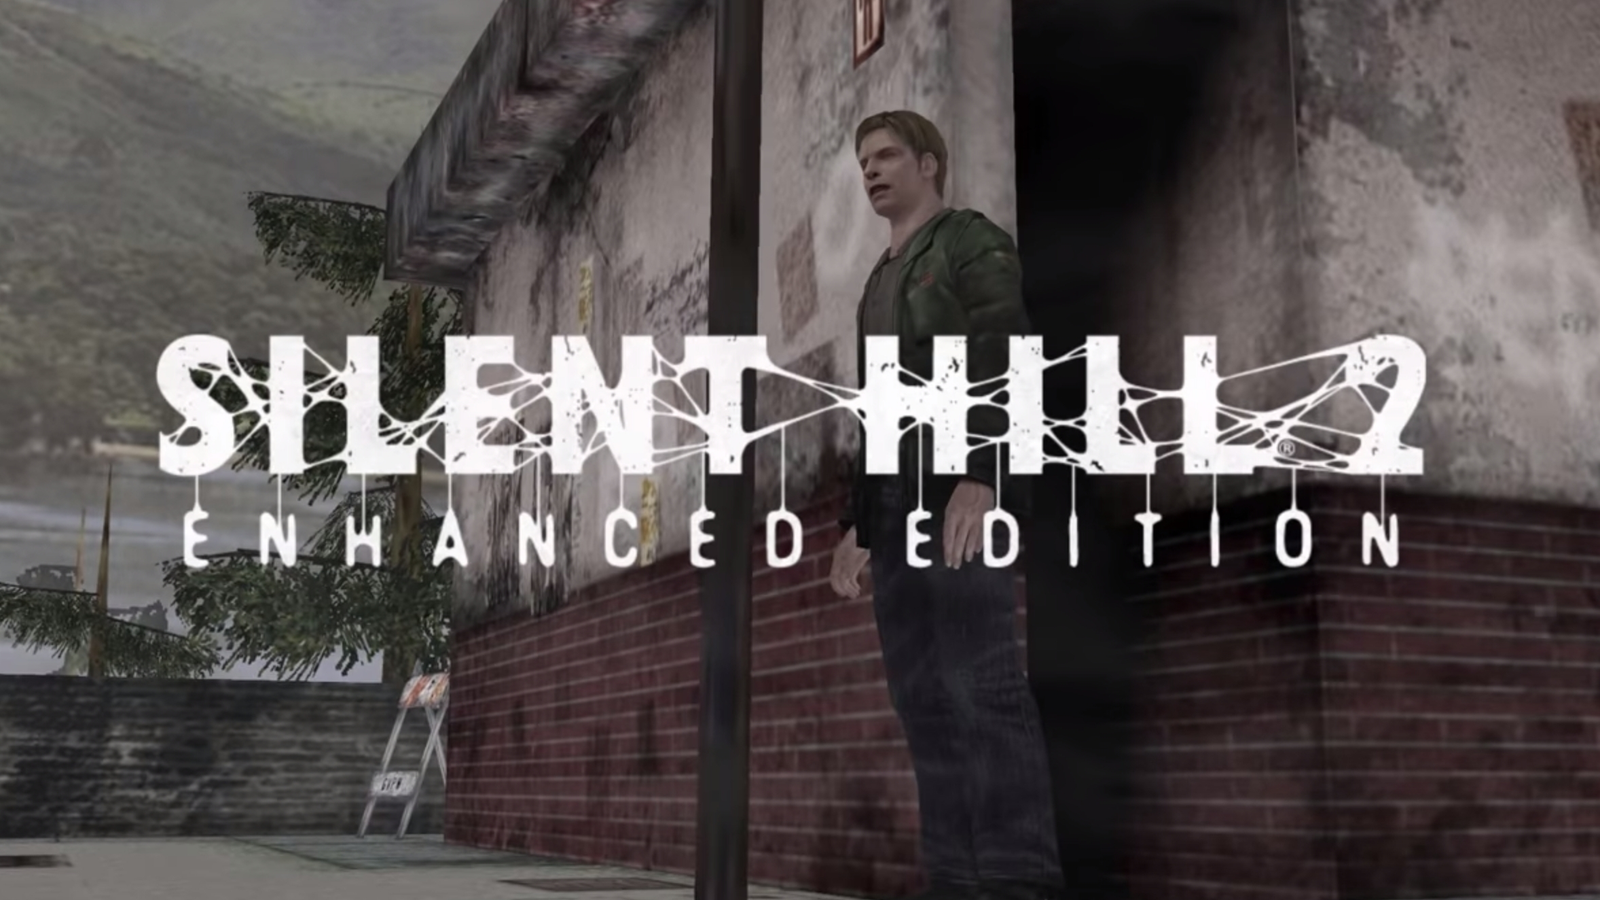 Silent Hill 2: Enhanced Edition Ending